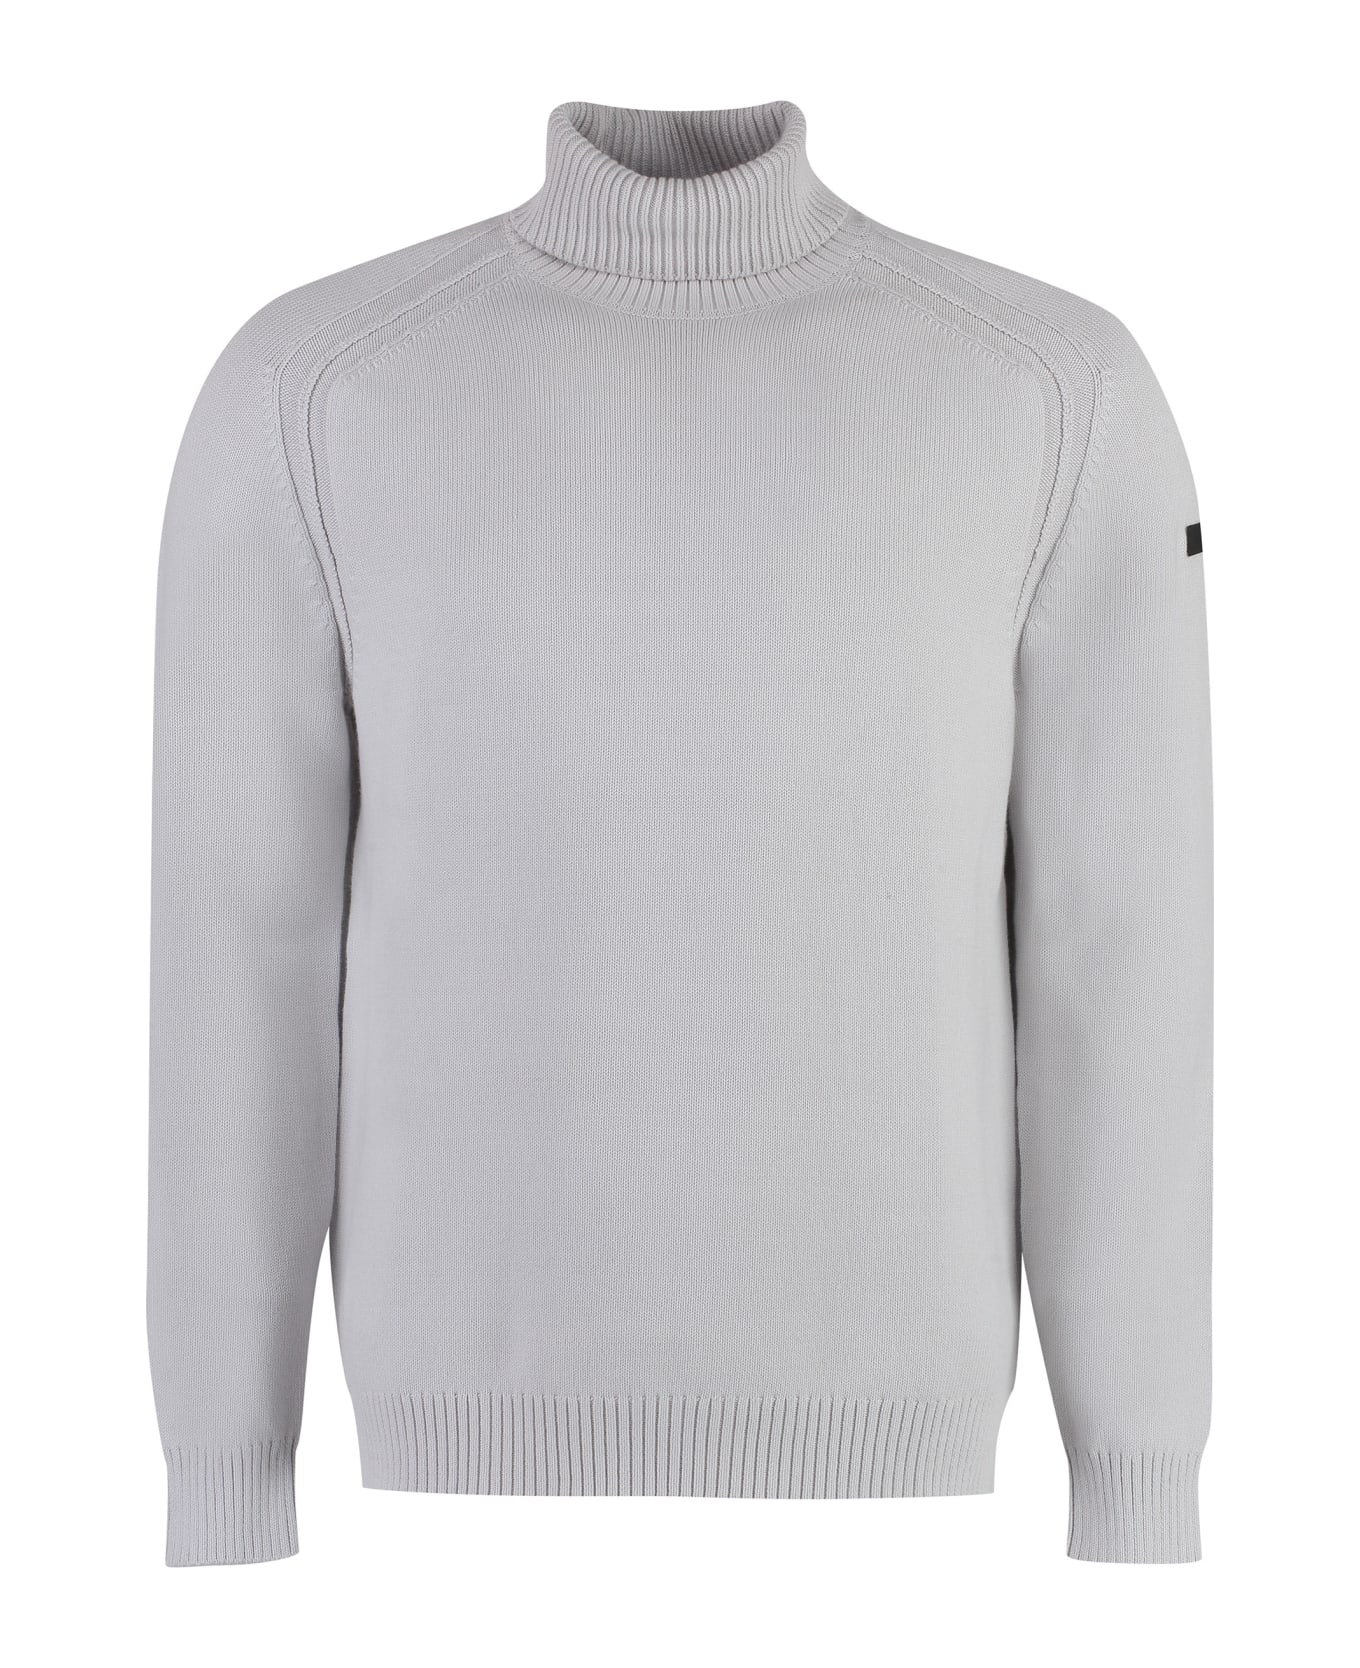 RRD - Roberto Ricci Design Cotton Turtleneck Sweater - grey